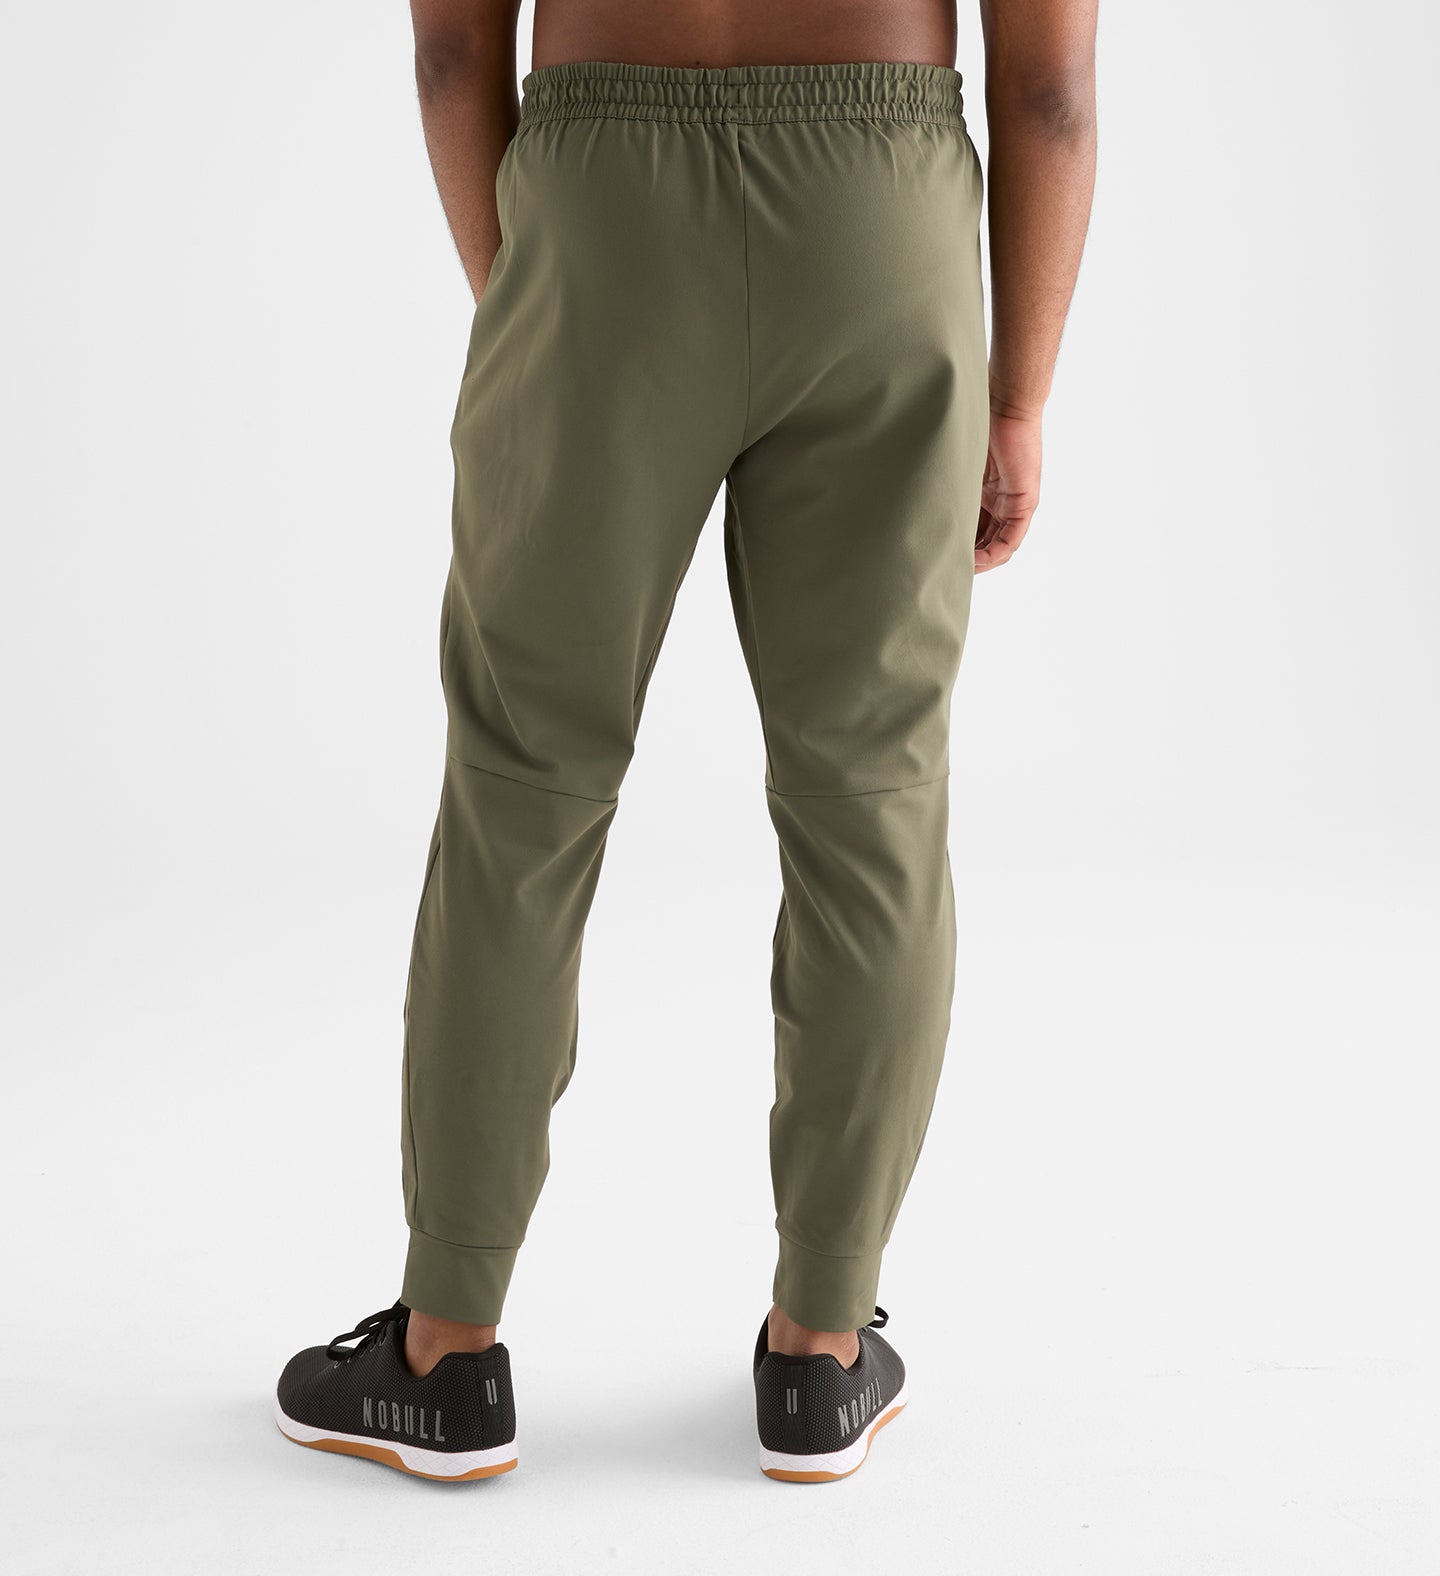 Champion Men's Cargo Track Pants 5-Pocket Athletic Activewear Sports Gym  Pant | eBay